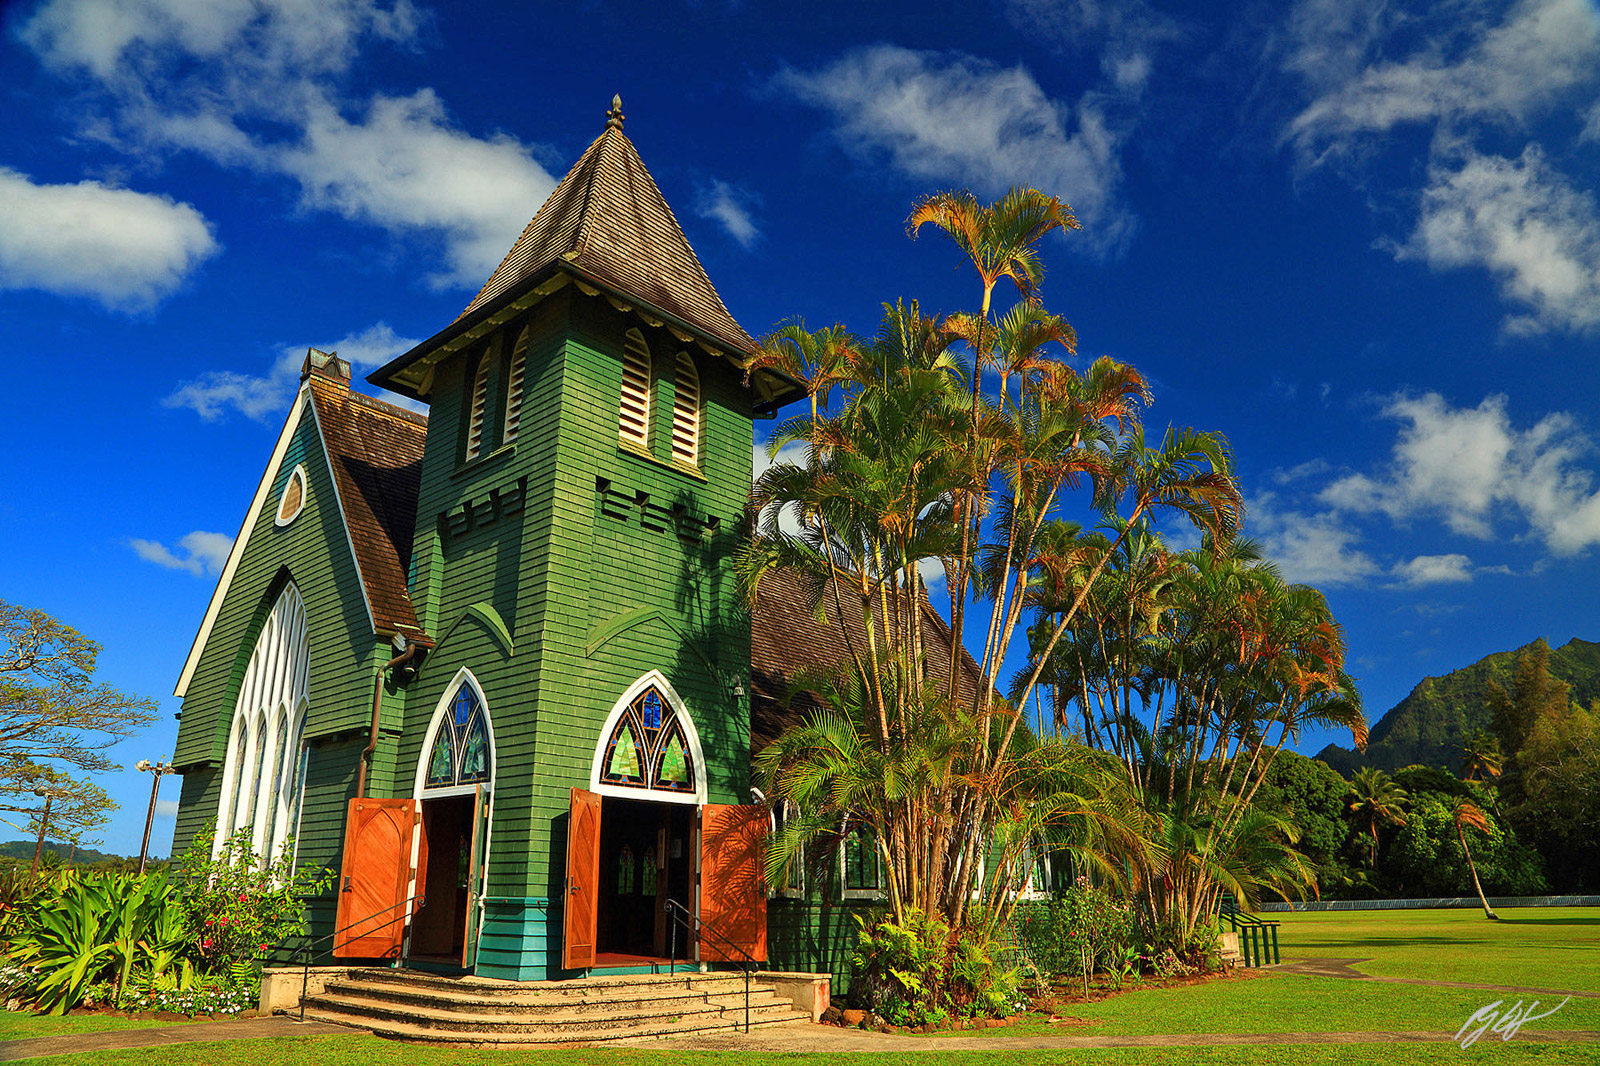 The Waiʻoli Huiʻia Church in Hanalei Kauai, Hawaii